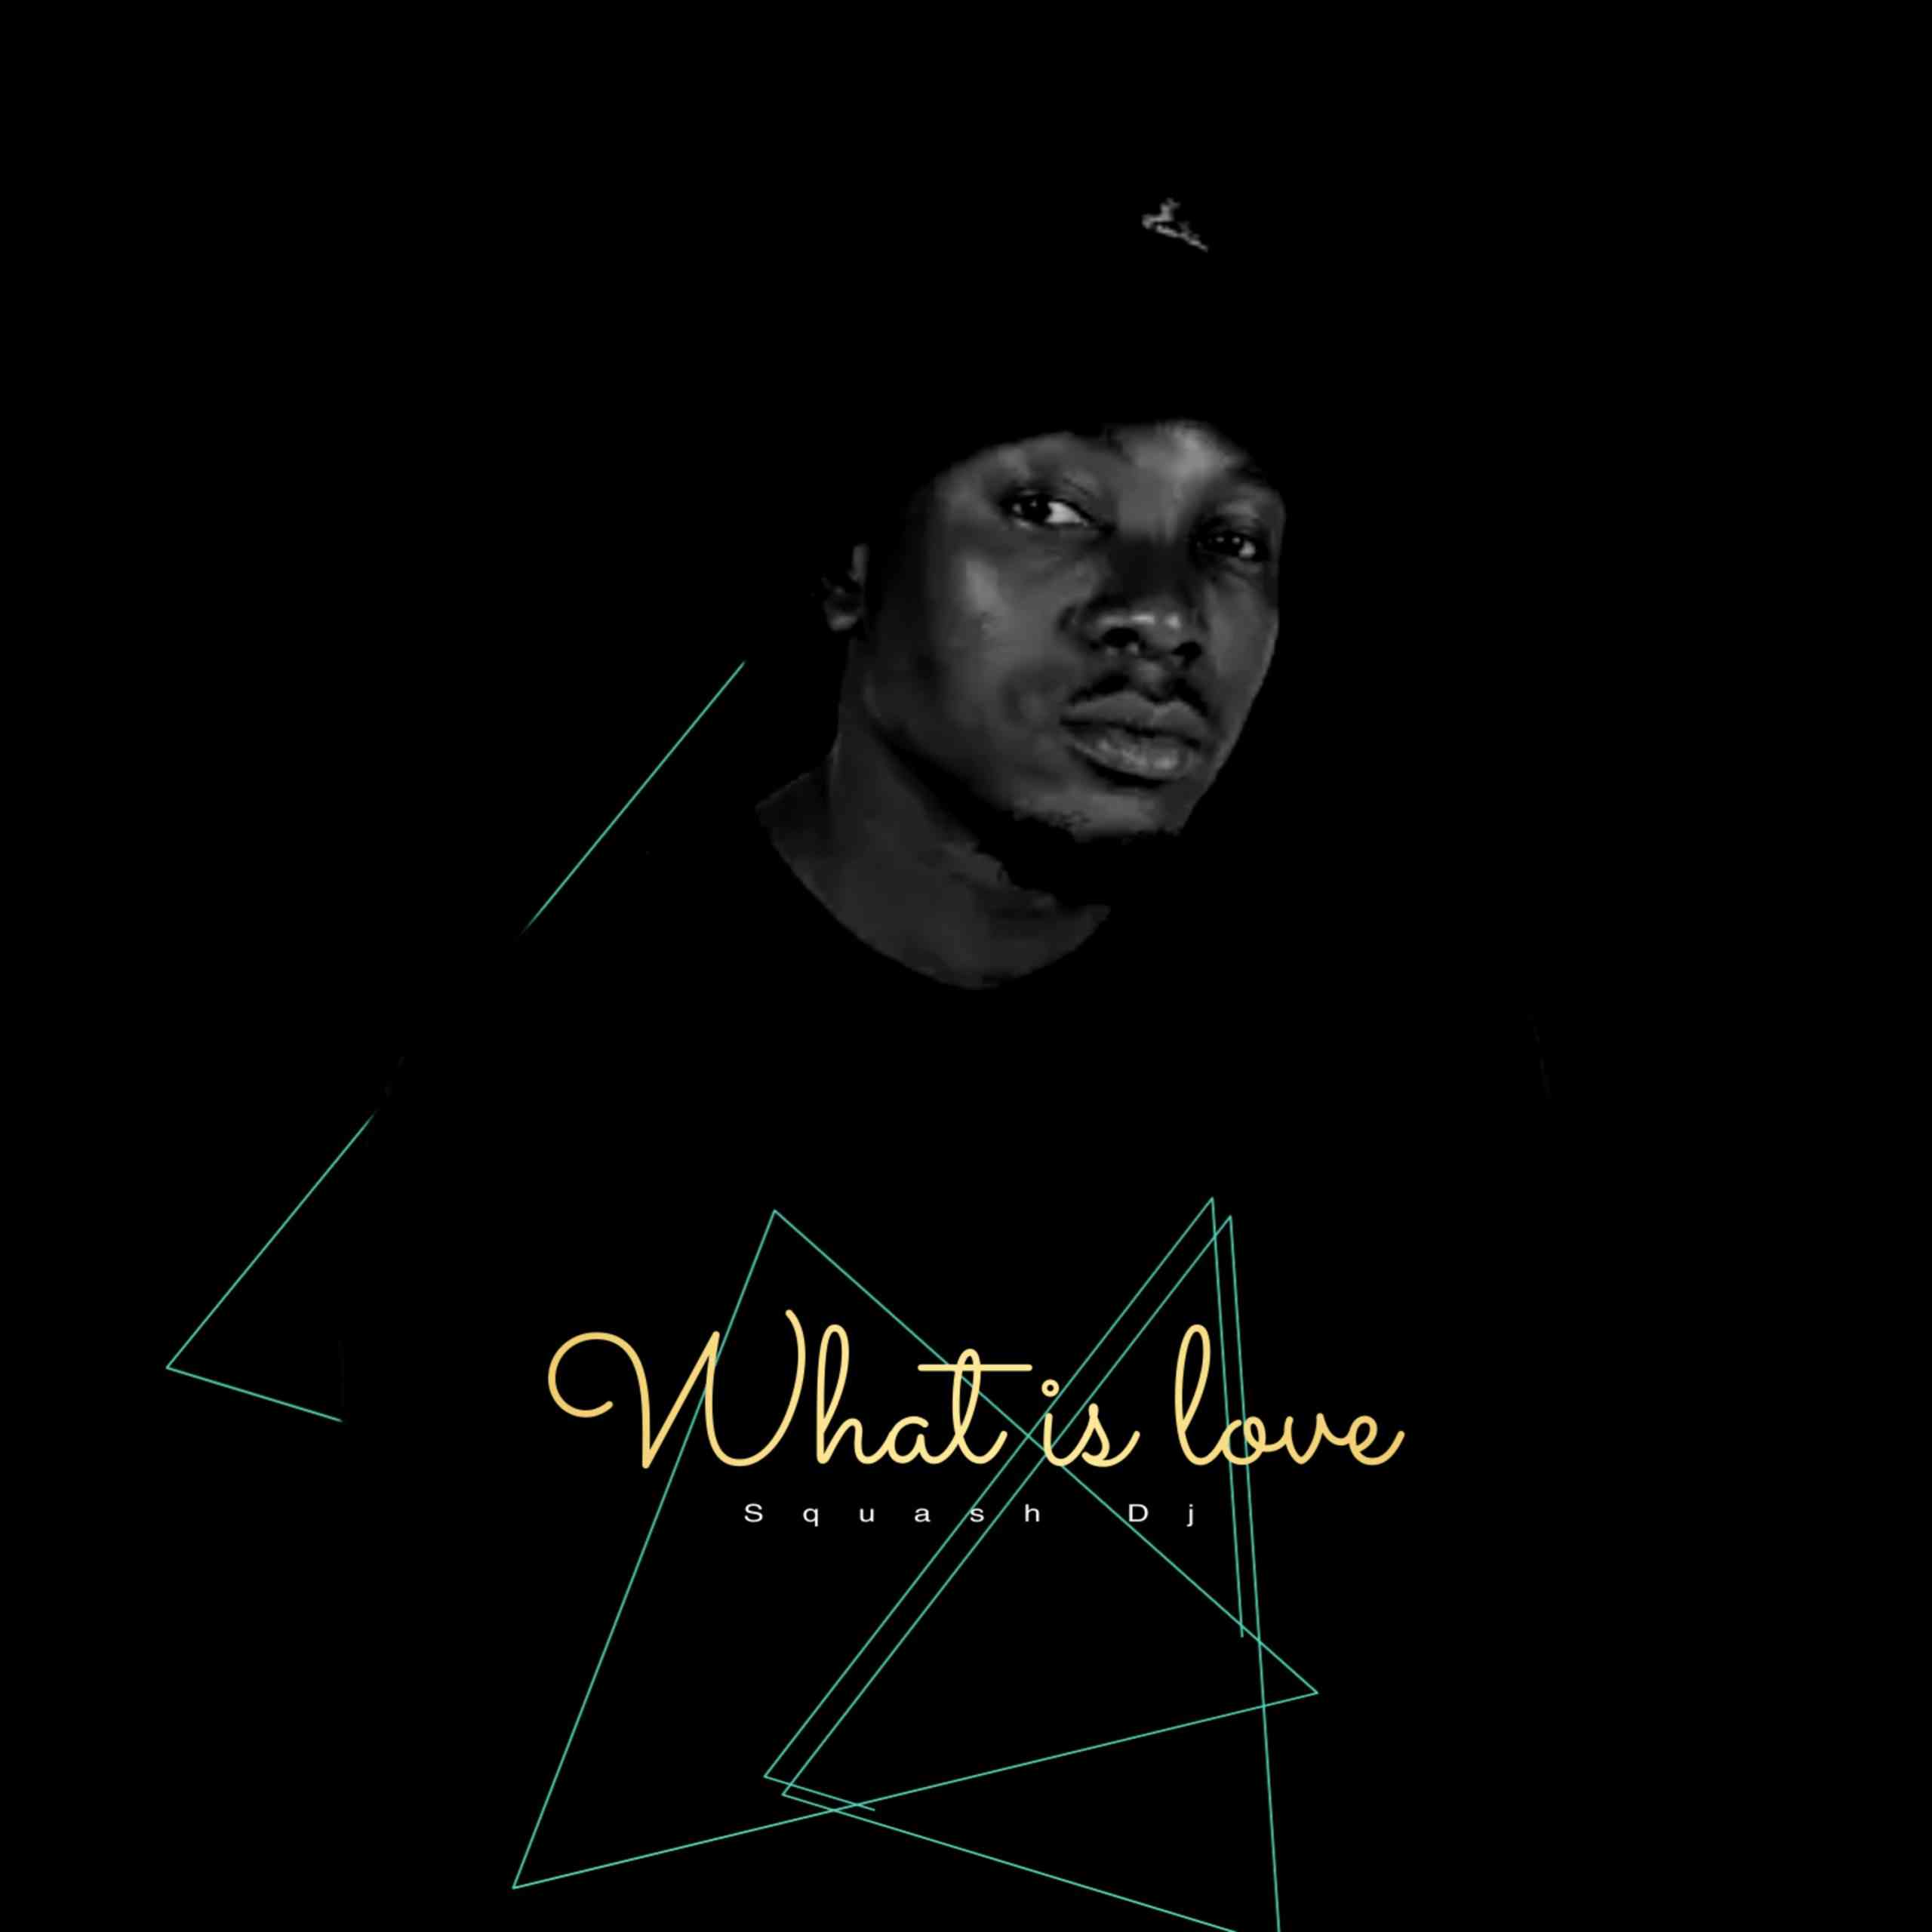 Squash Dj - What is Love? 